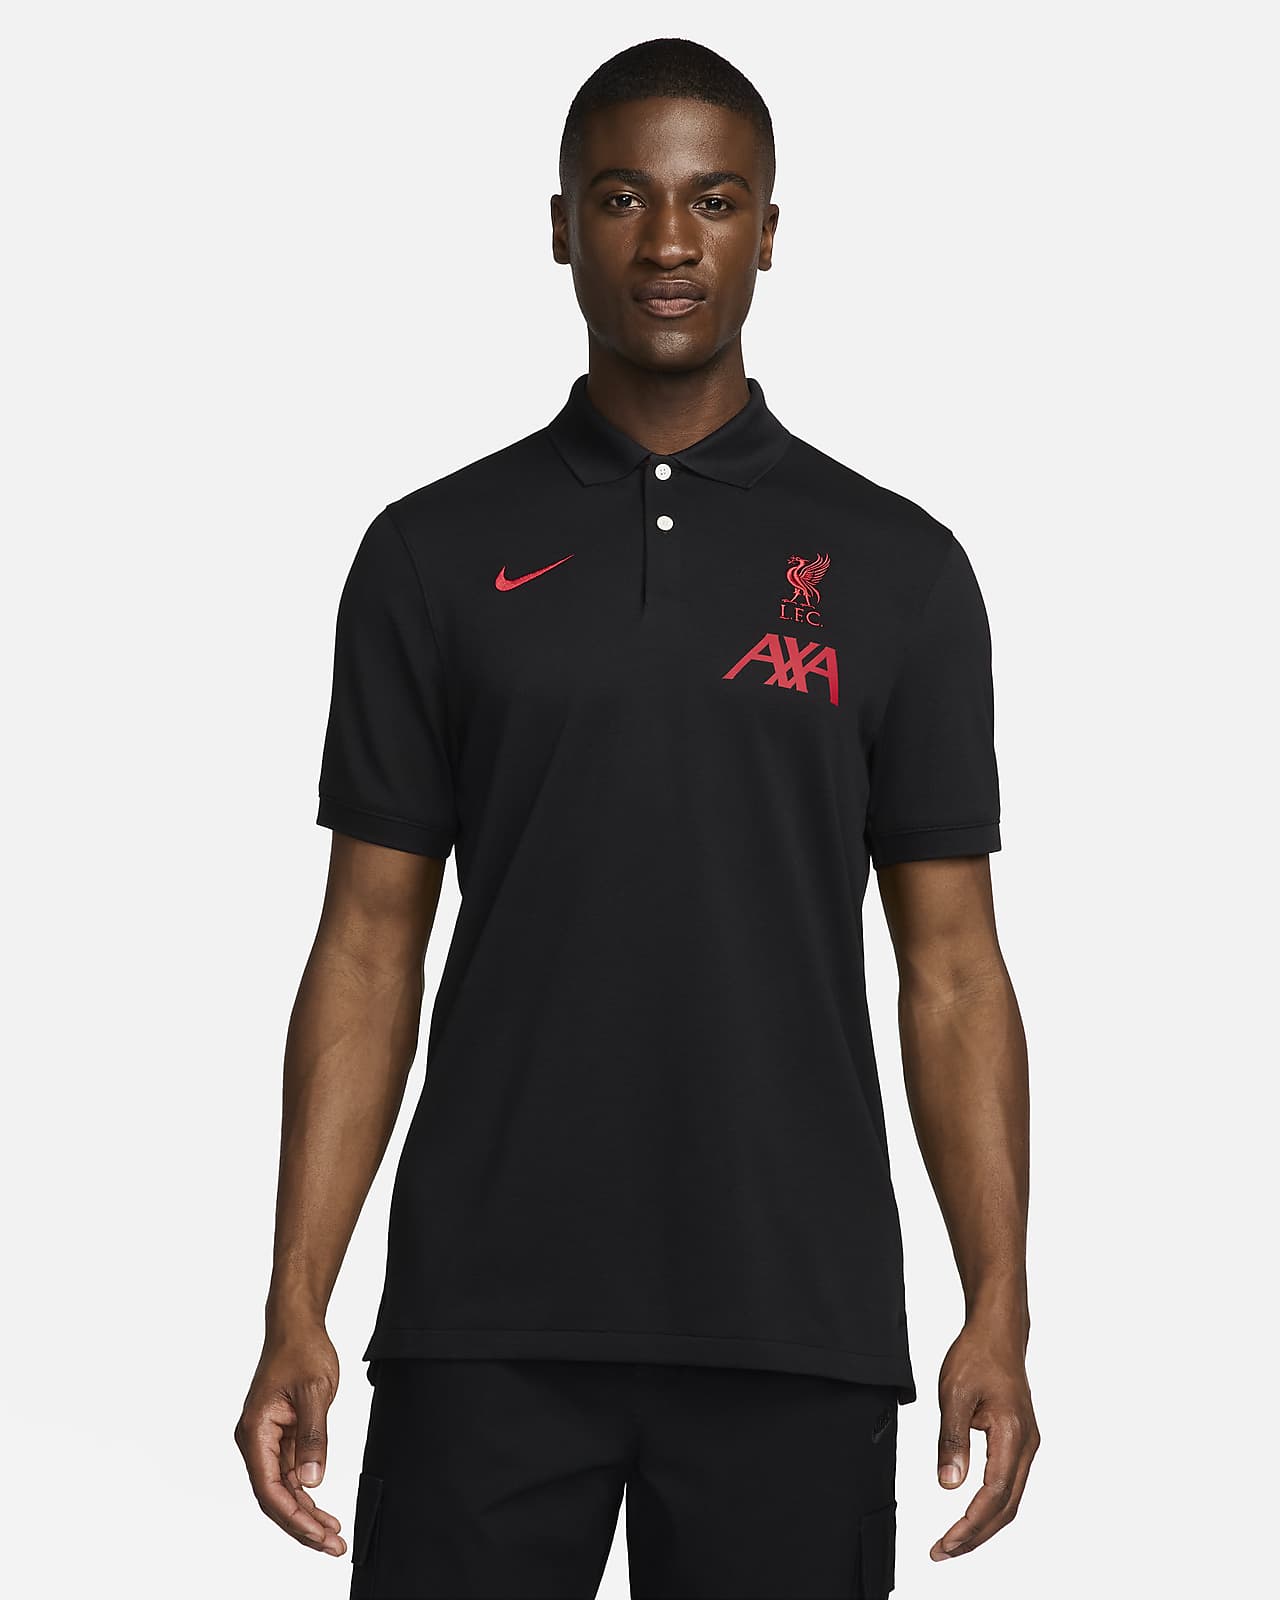 FC Liverpool The Nike Polo Nike Dri-FIT Fußball-Poloshirt (Herren)